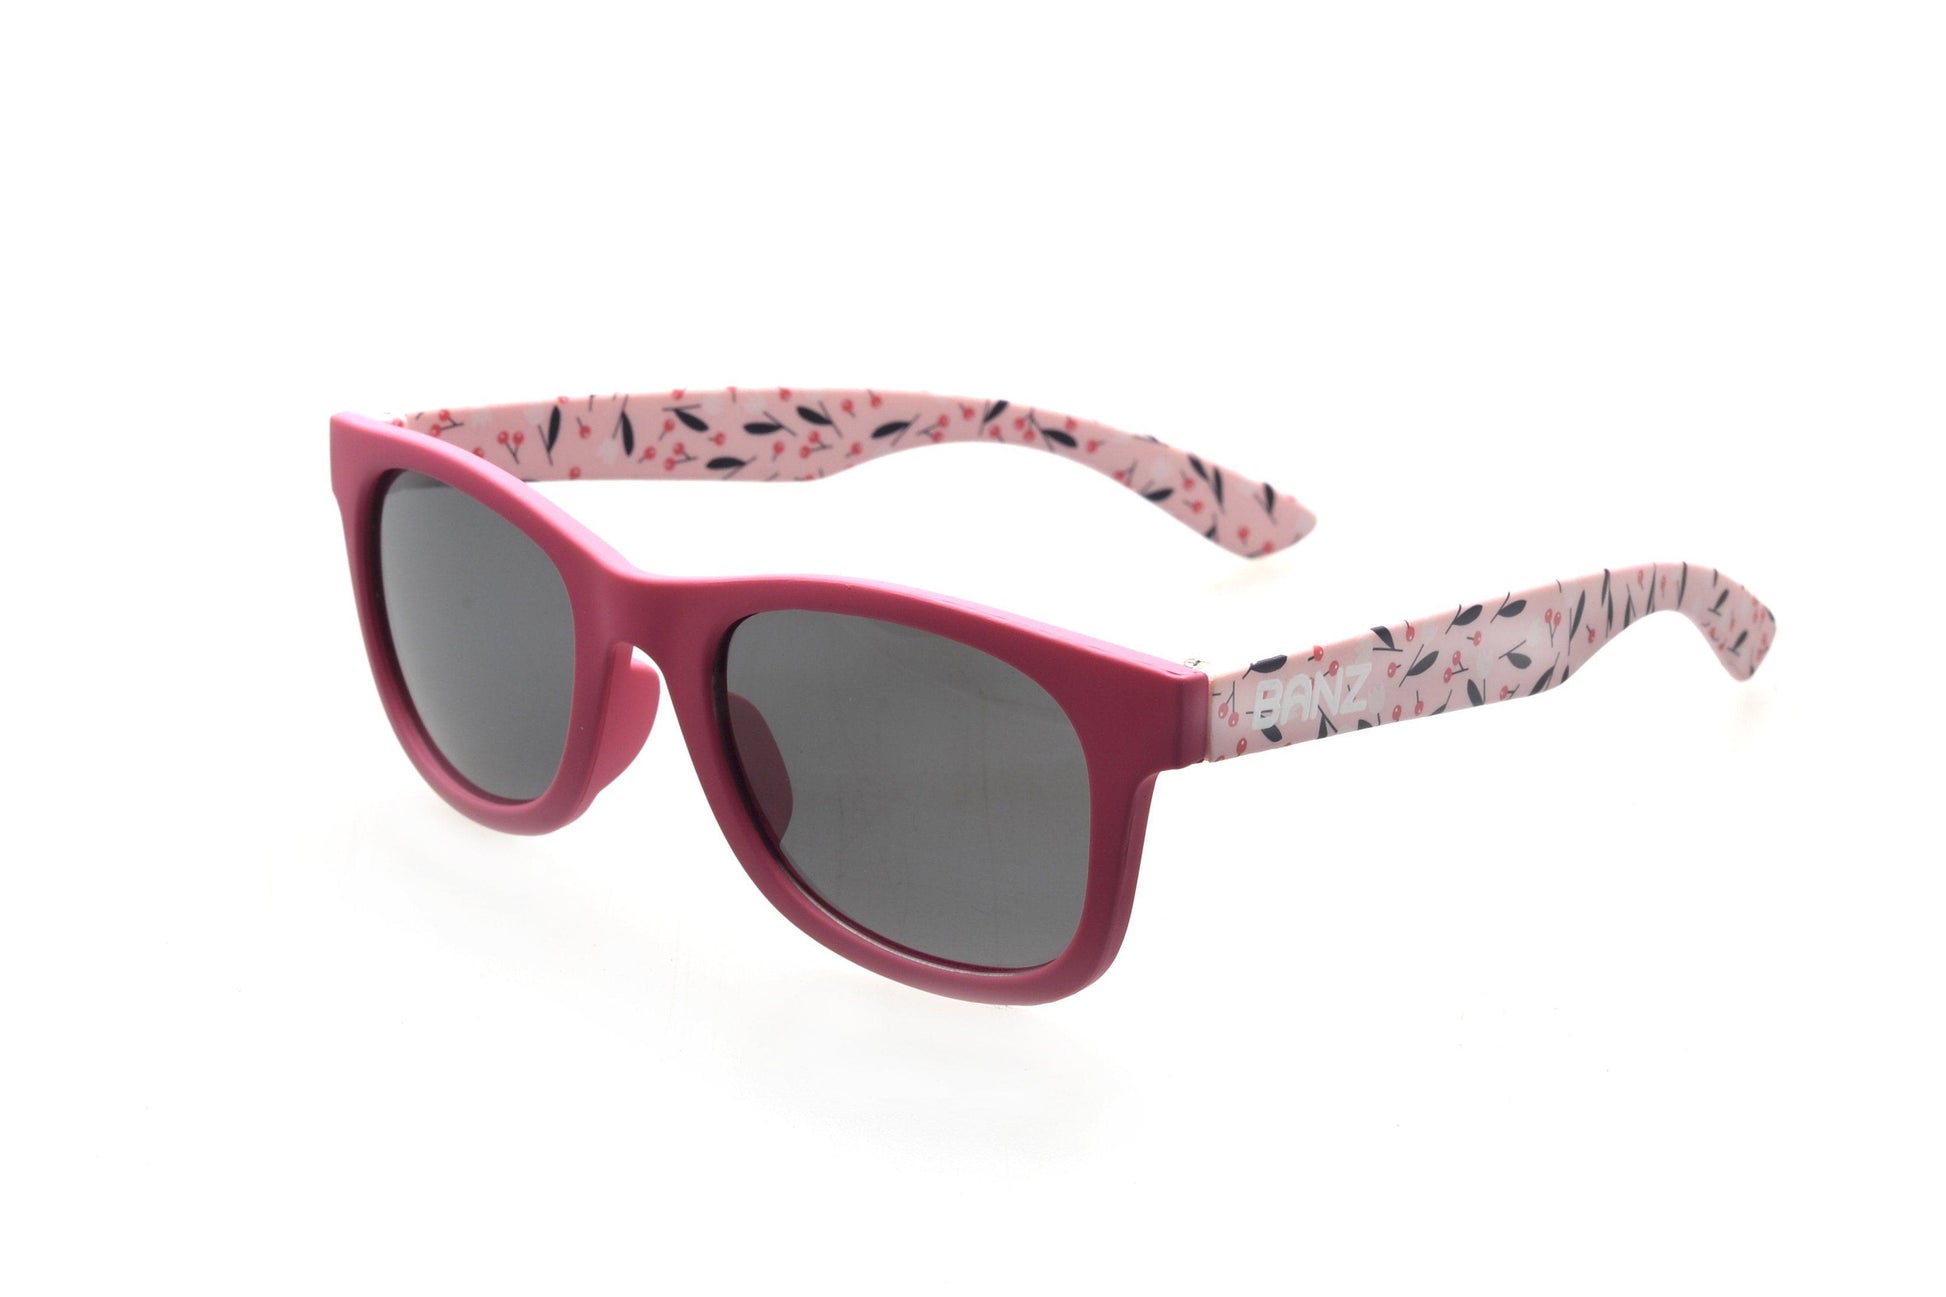 BANZ Sunglasses NEW! Kids Beachcomber Sunglasses Petite Cherry Floral